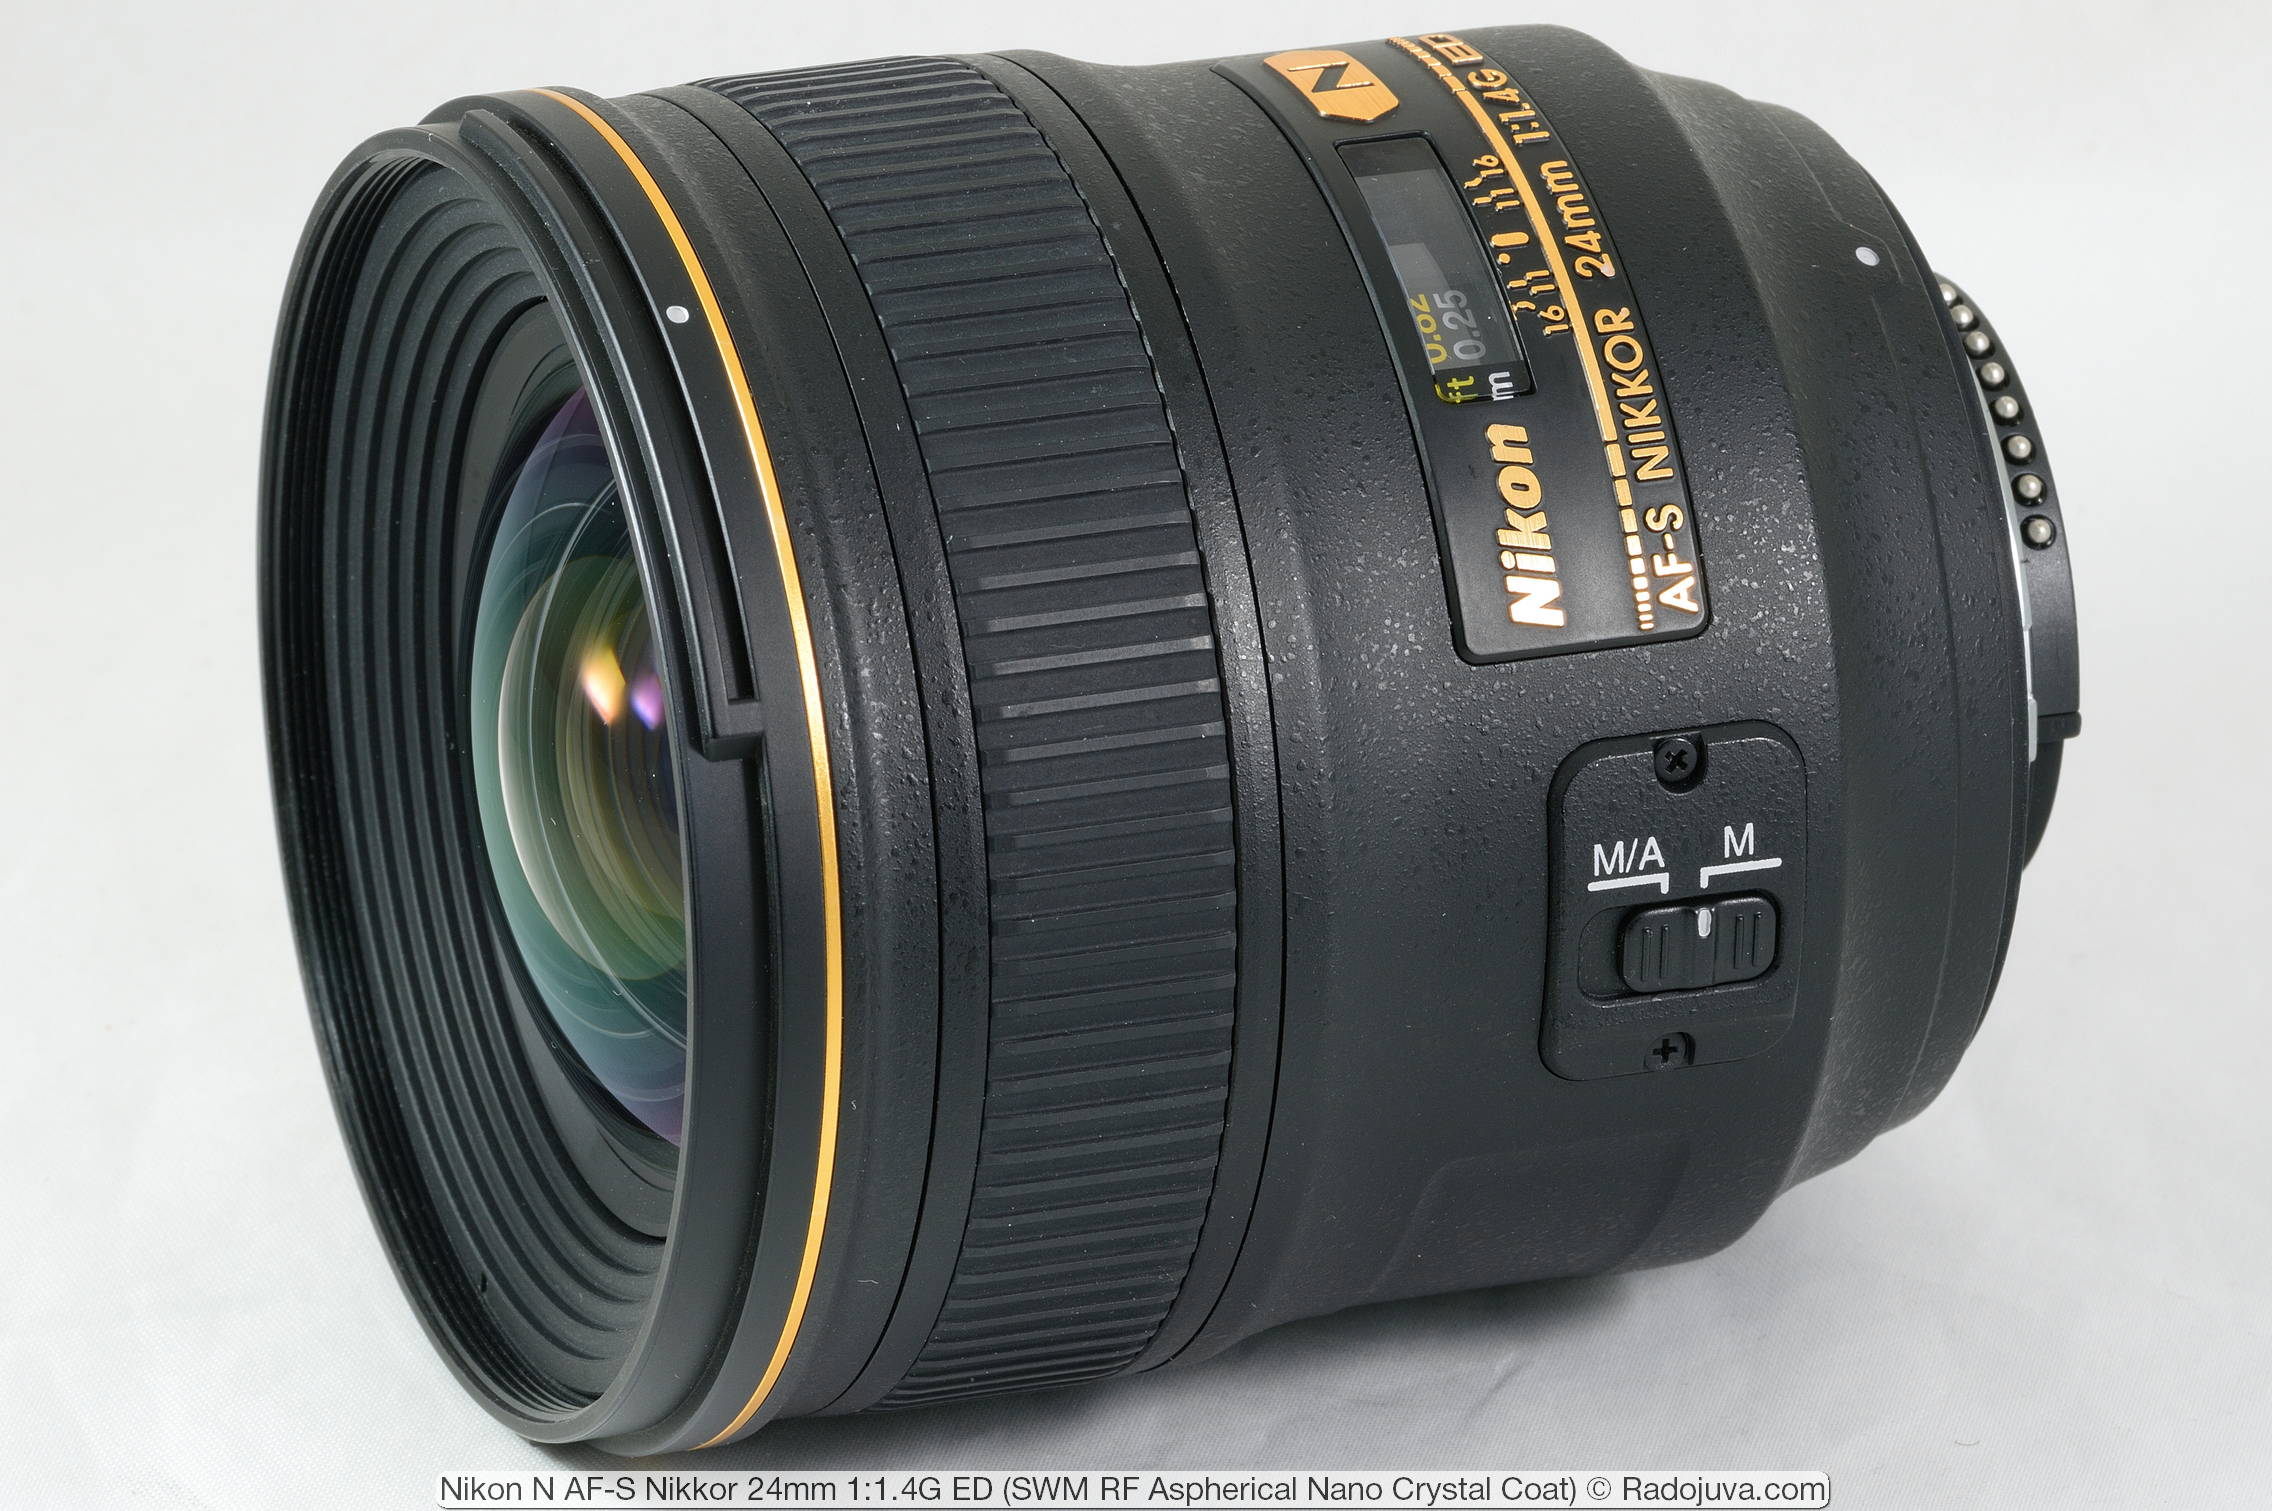 Nikon N AF-S Nikkor 24mm 1:1.4G ED (SWM RF Aspherical Nano Crystal Coat)